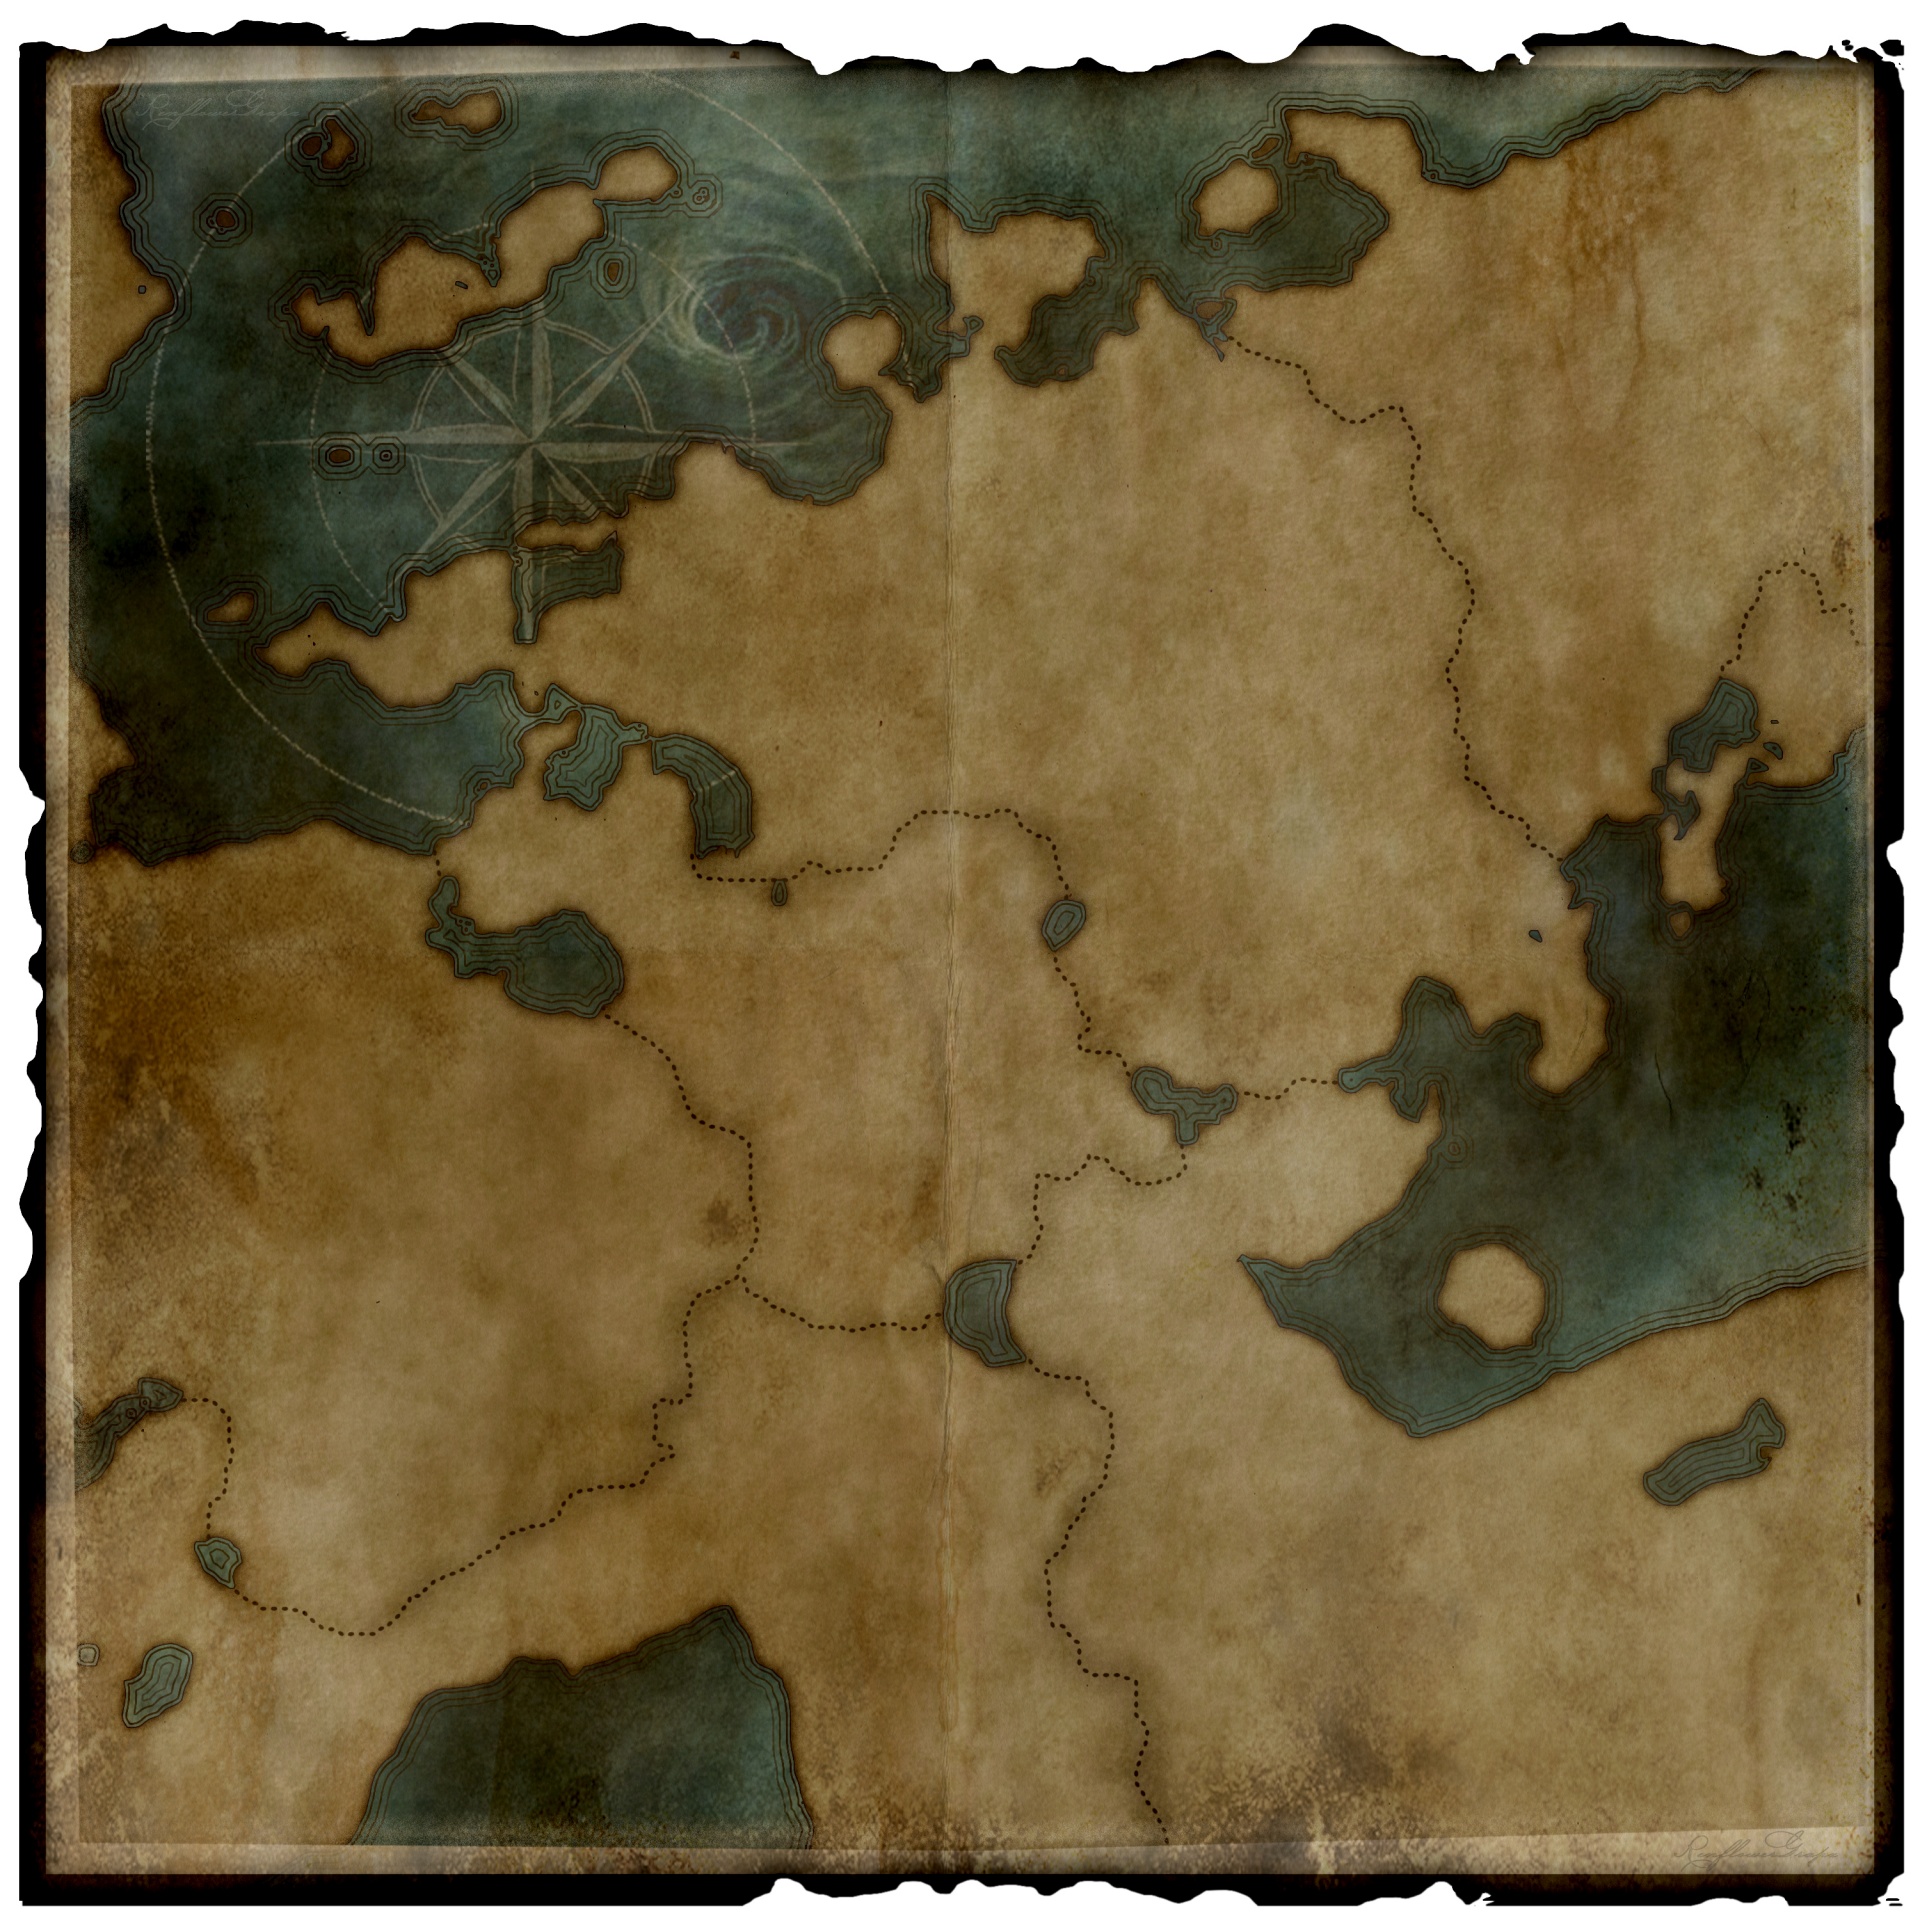 Free Fantasy Map